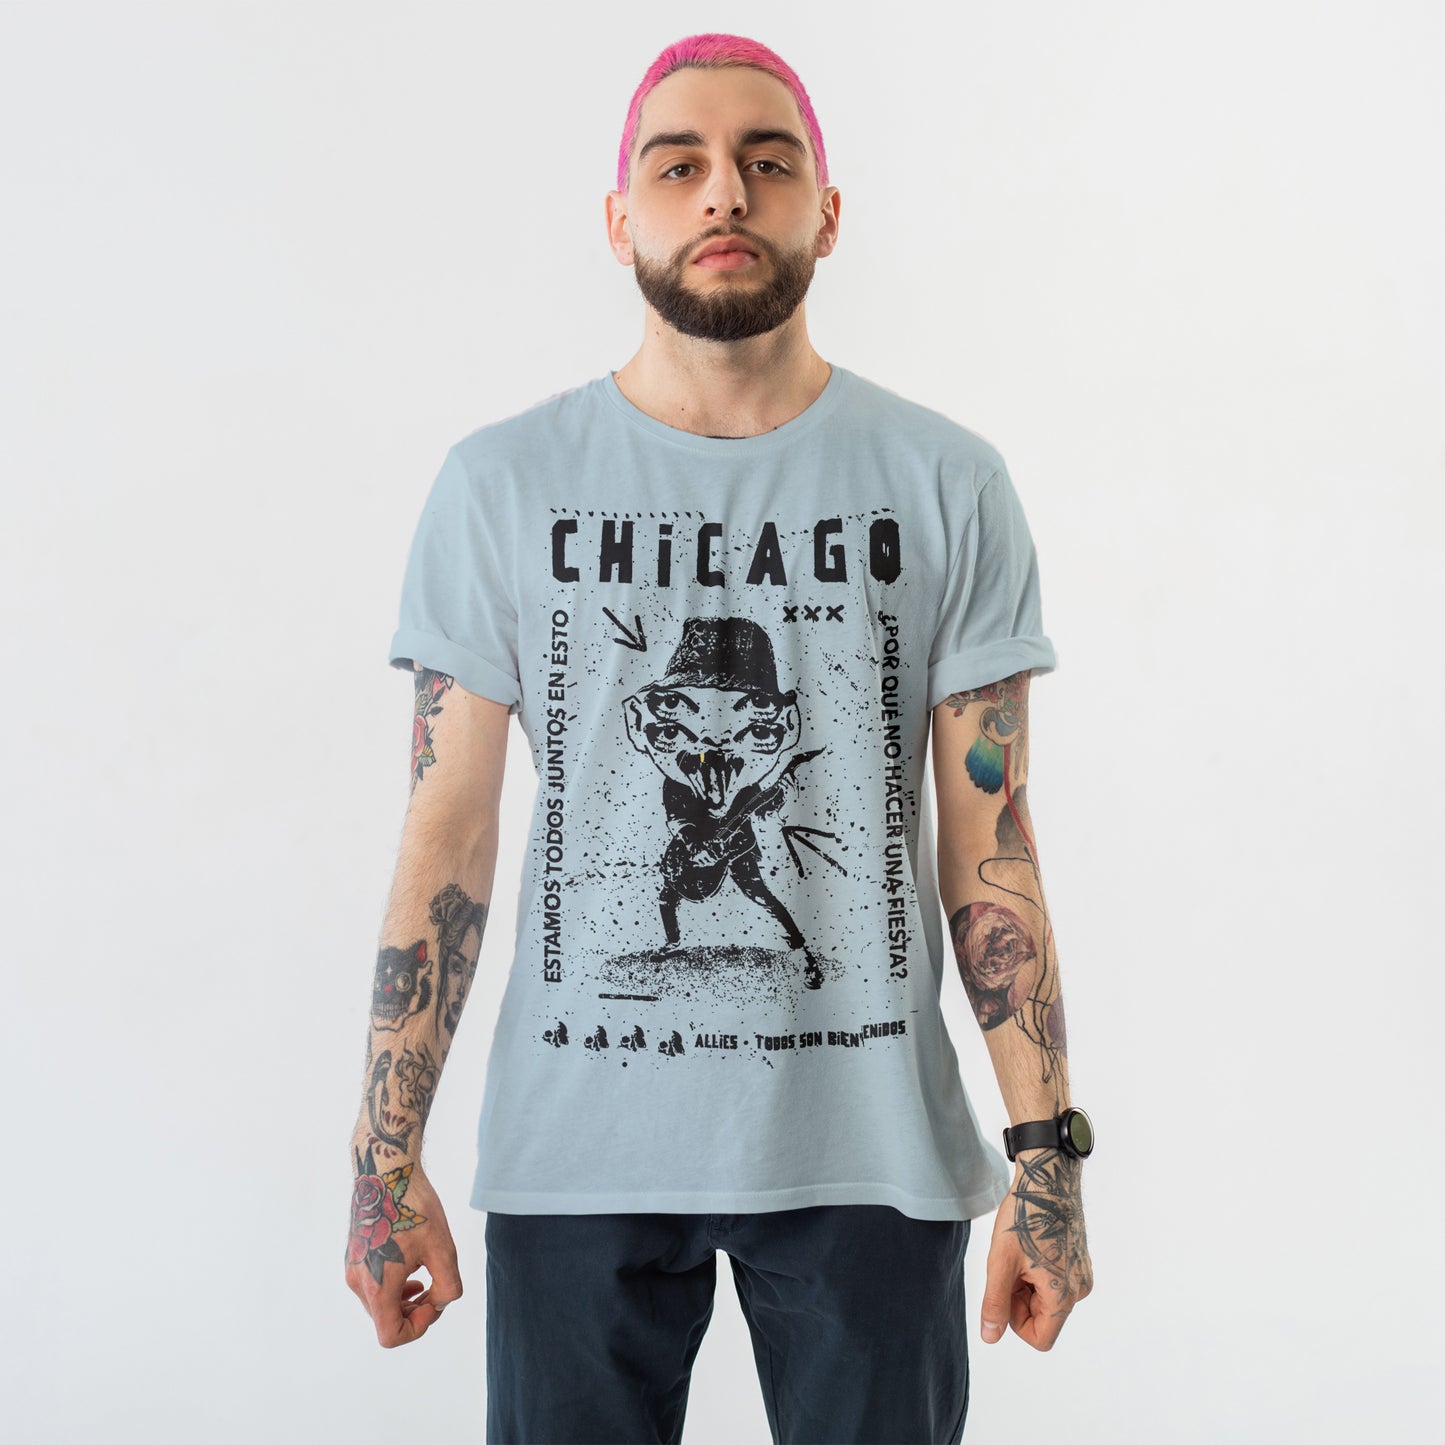 Chicago Punk T-shirt